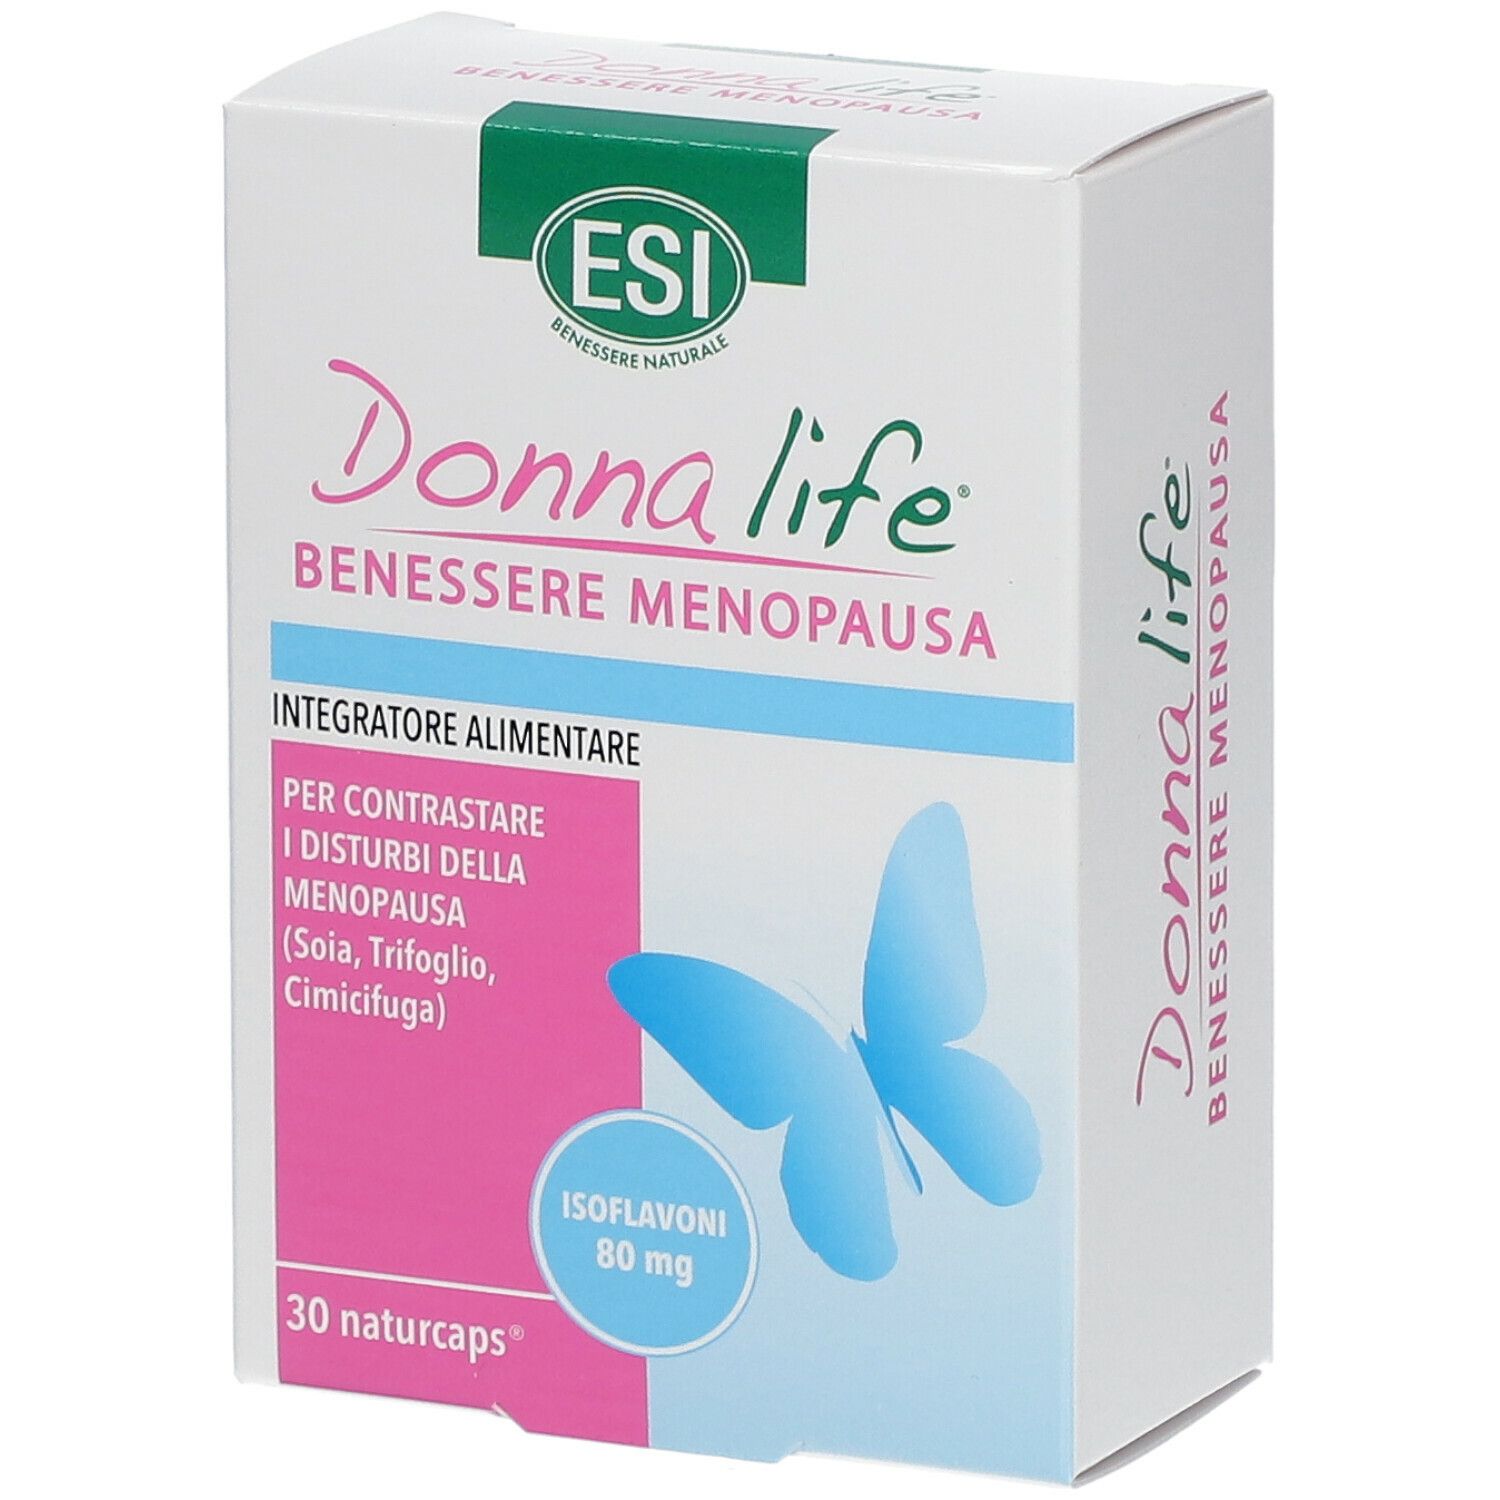 Image of ESI Donna Life Benessere Menopausa